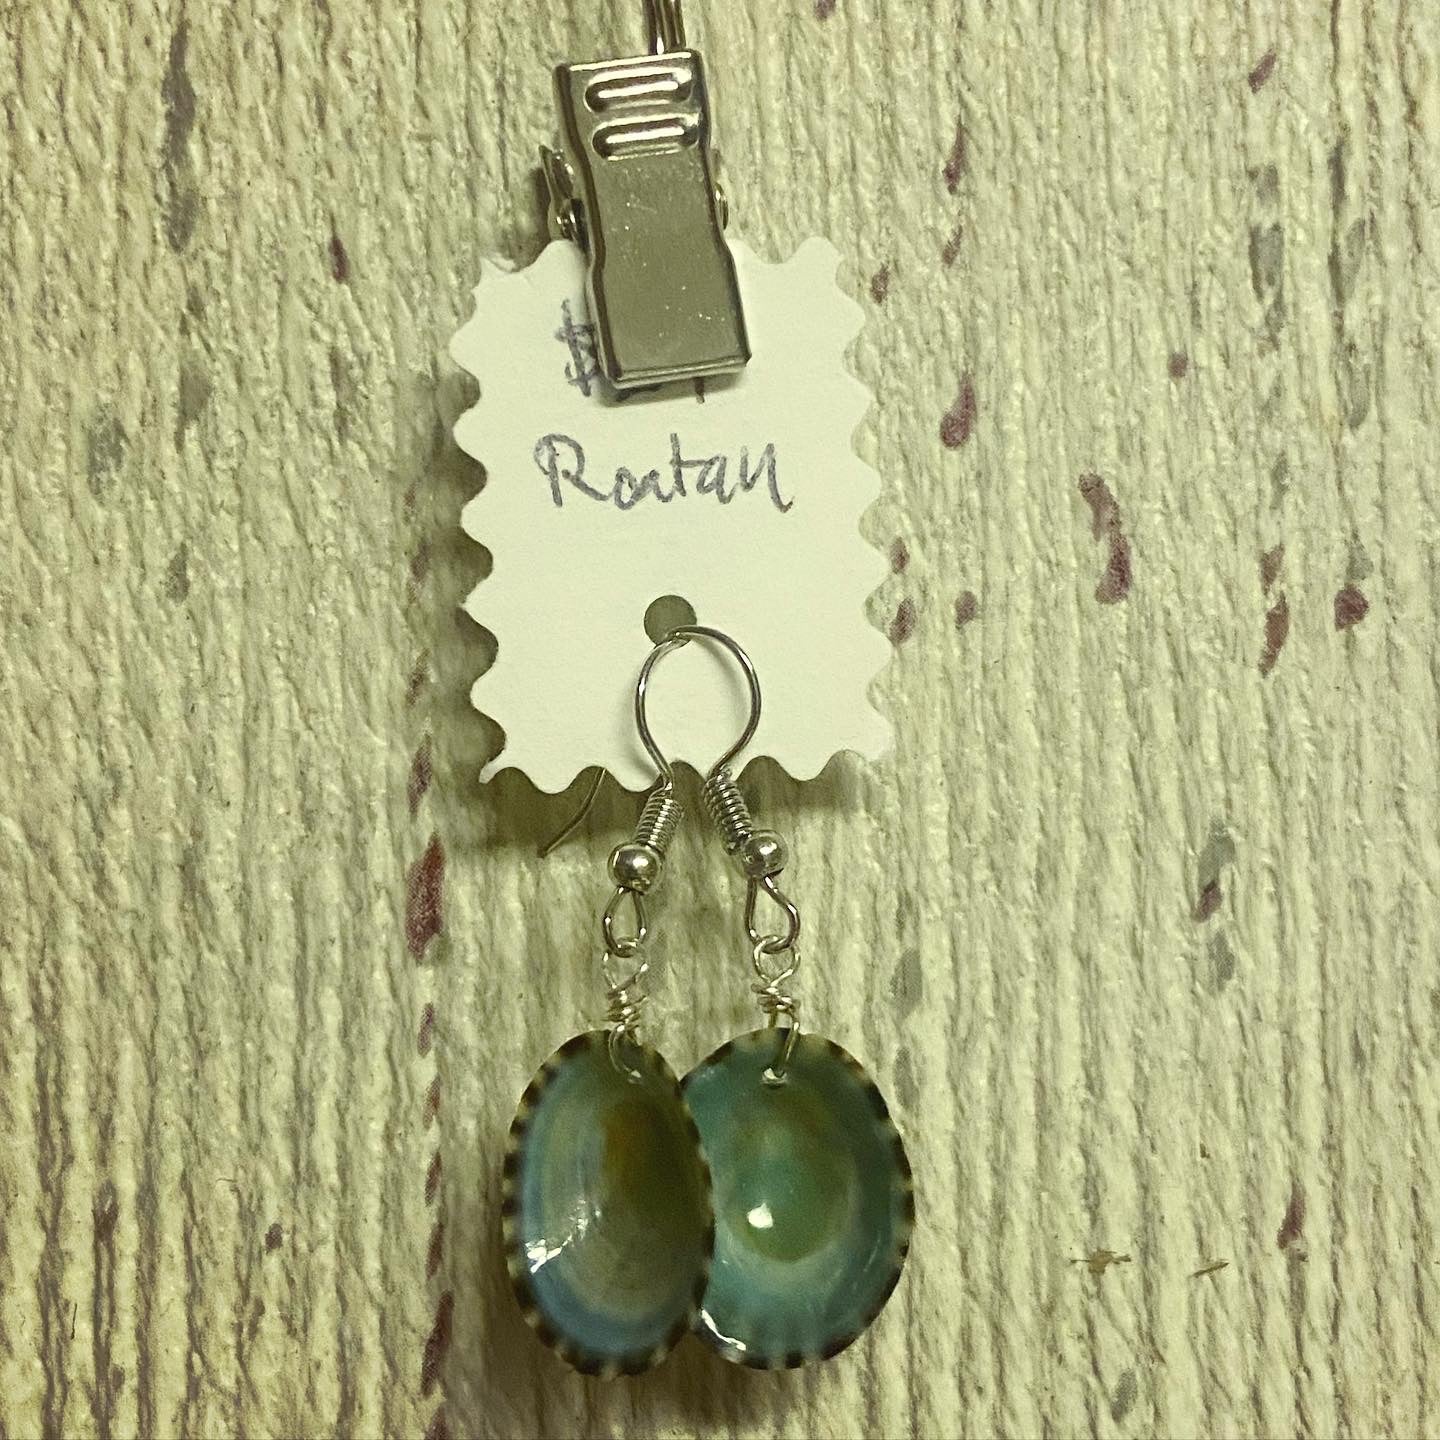 Handmade Earrings: Roatan Collection